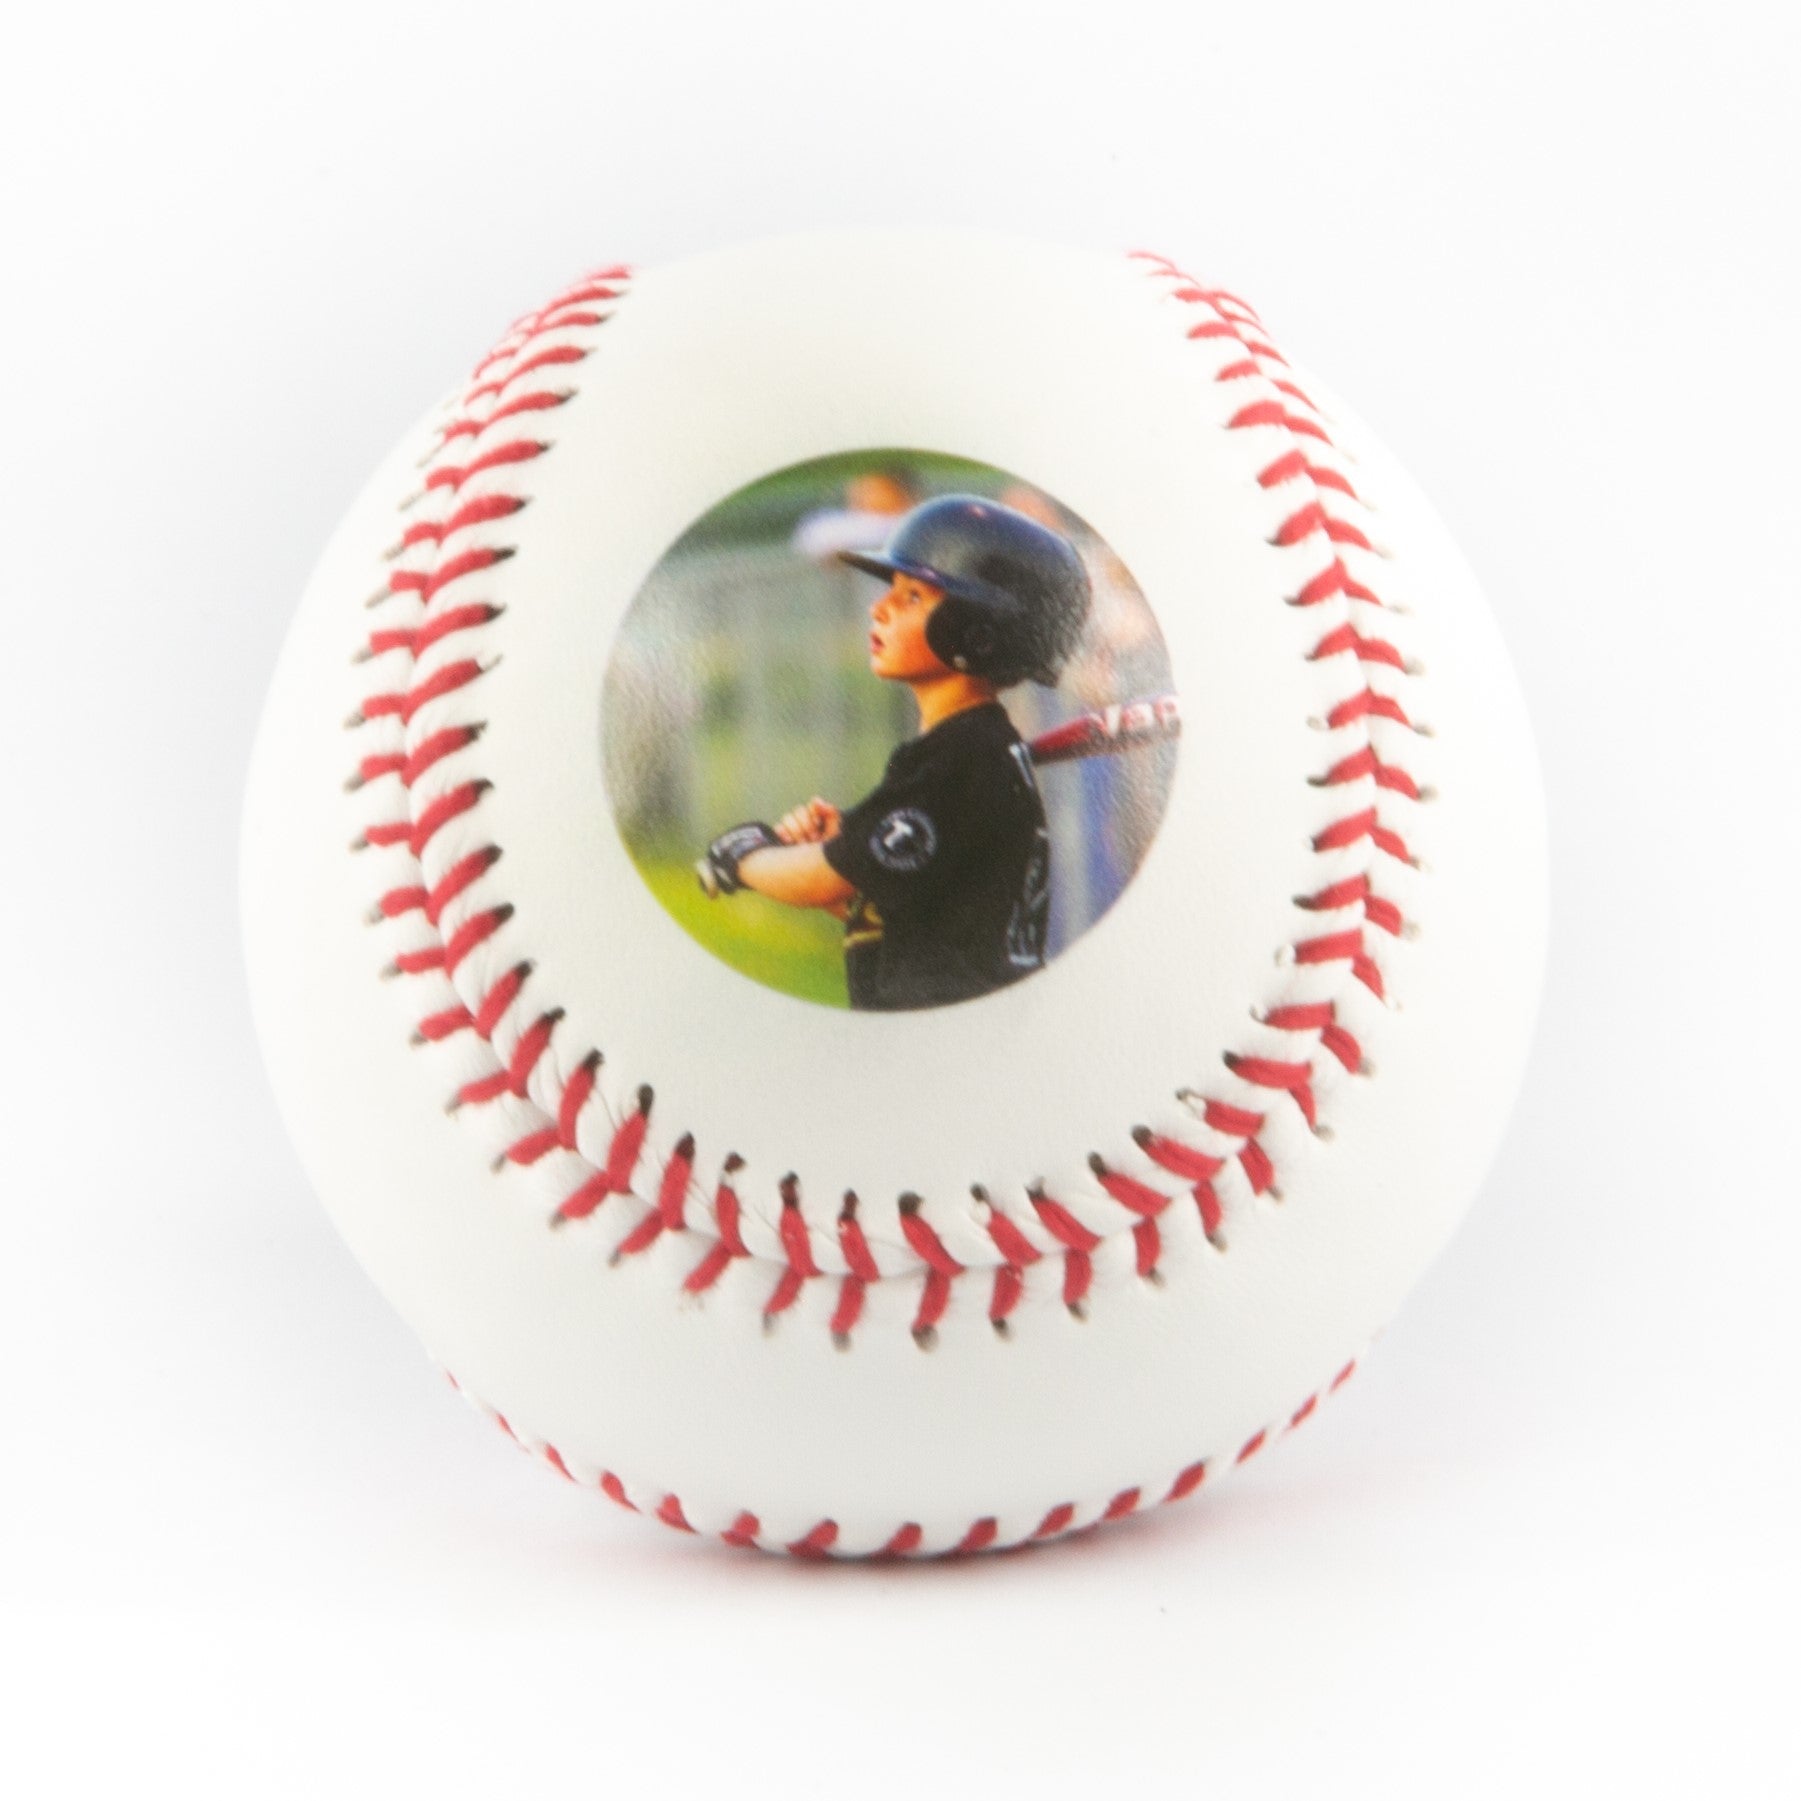 Printed Baseball with Custom Printed Logo